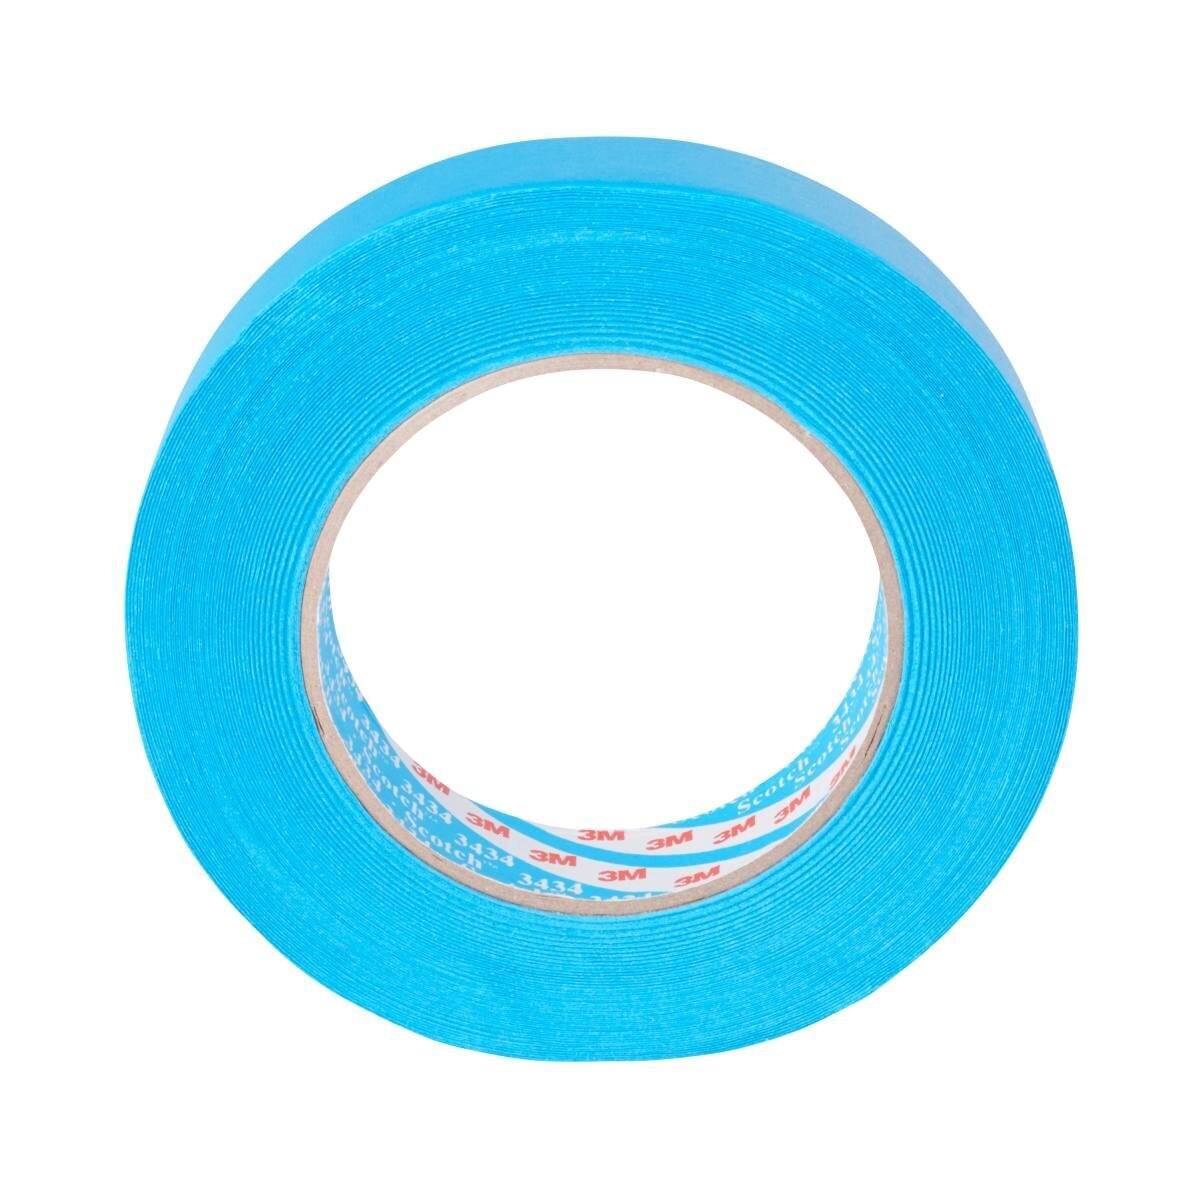 3M Scotch Blauwe Tape 3434, Blauw, 24 mm x 50 m #07897